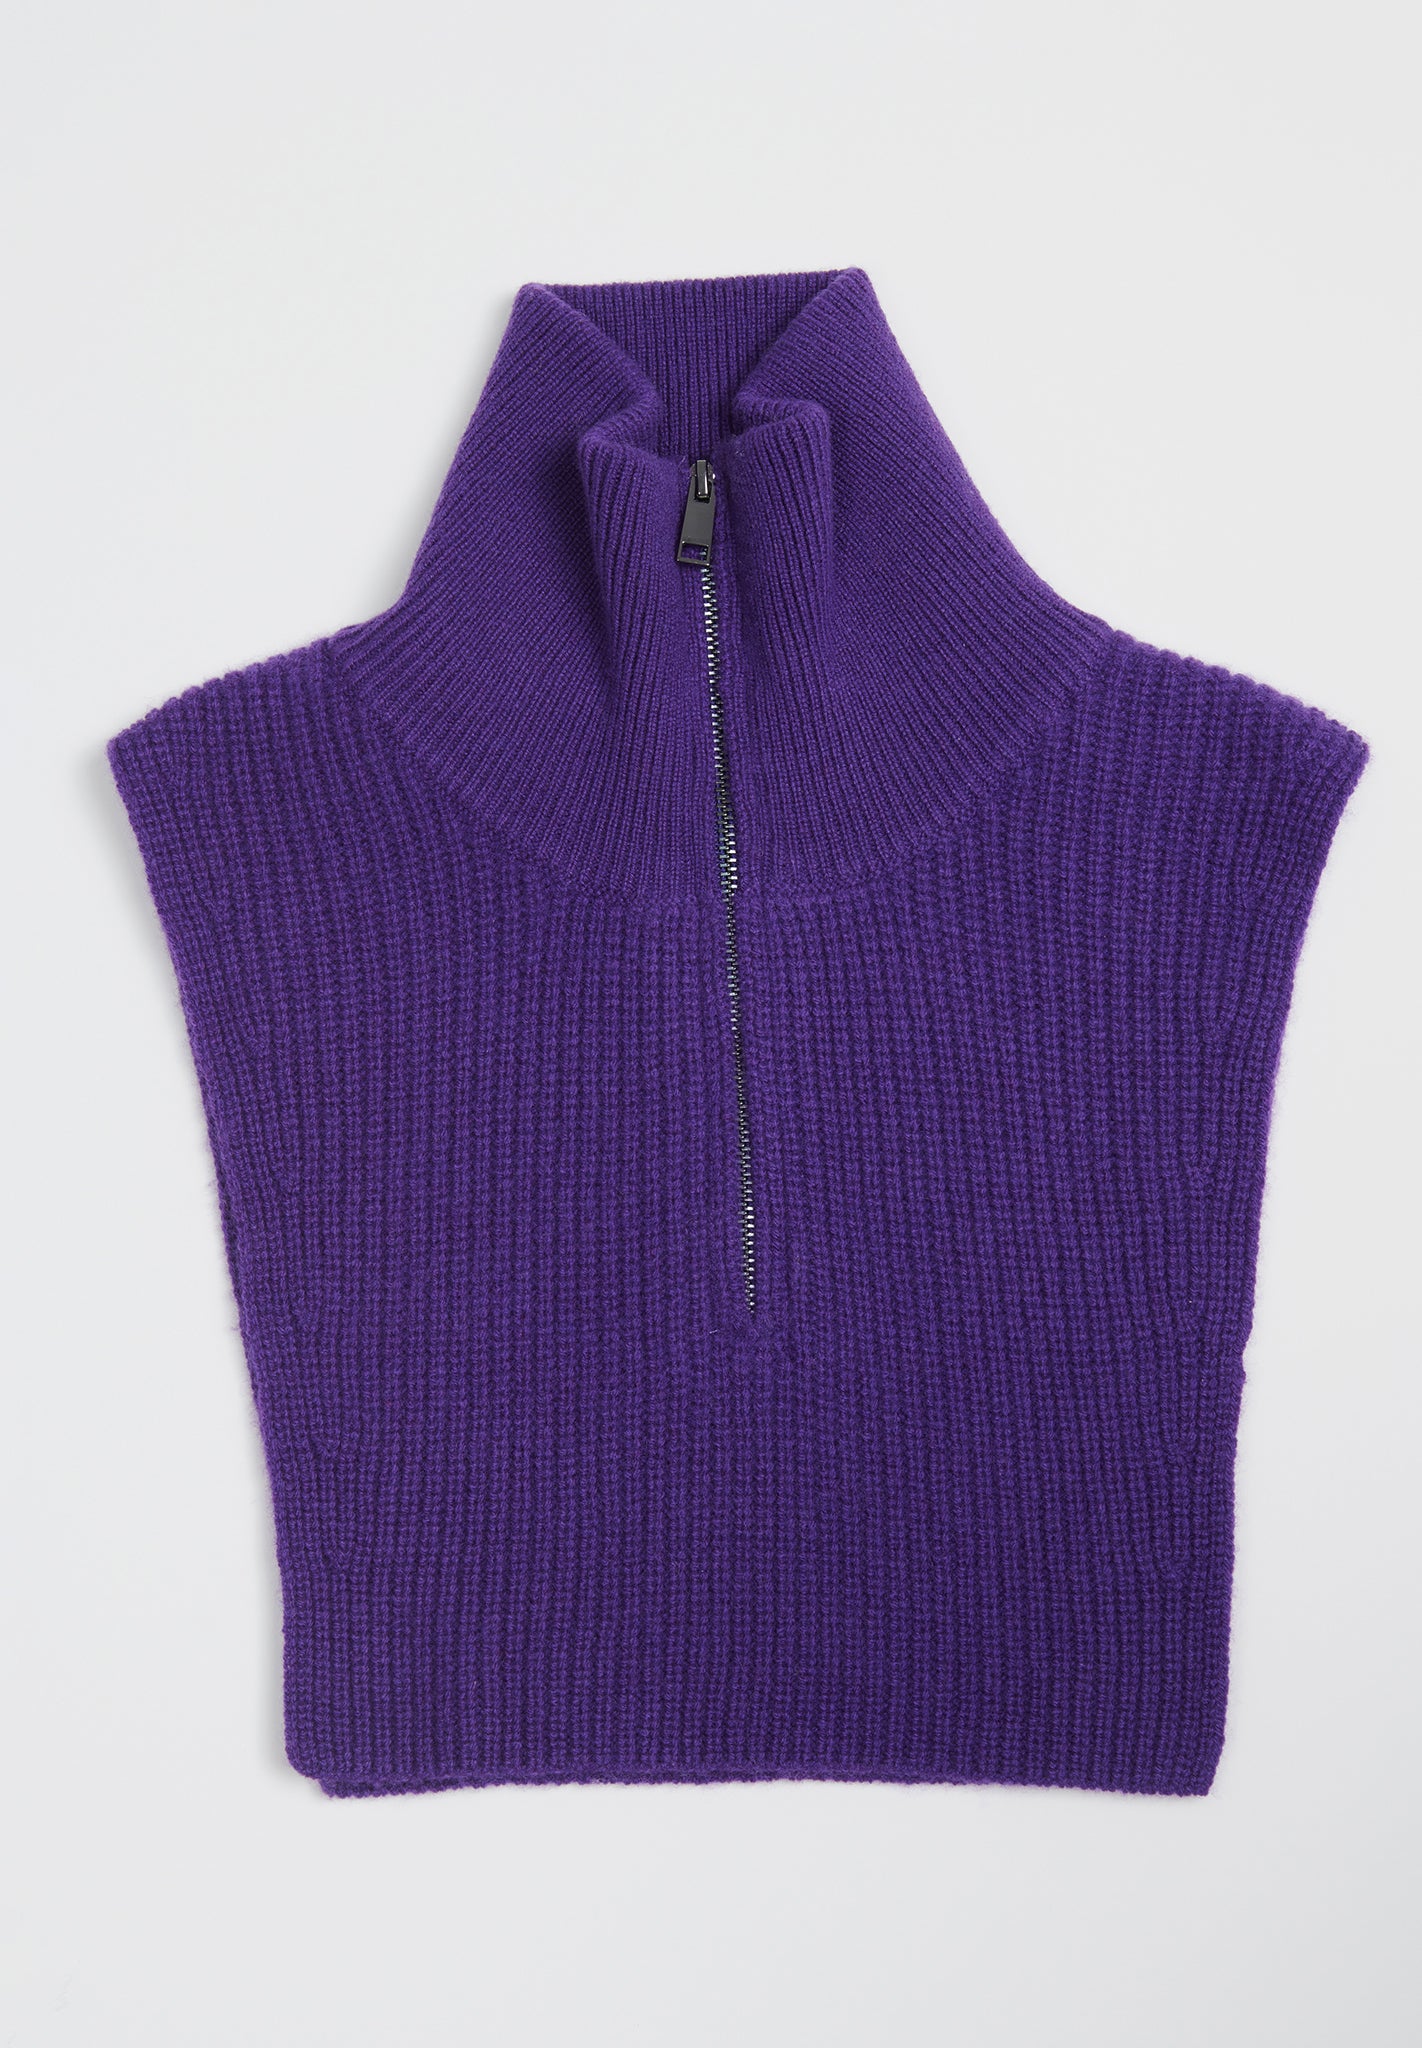 ZAYA 1 Snood in purple 4-thread cashmere